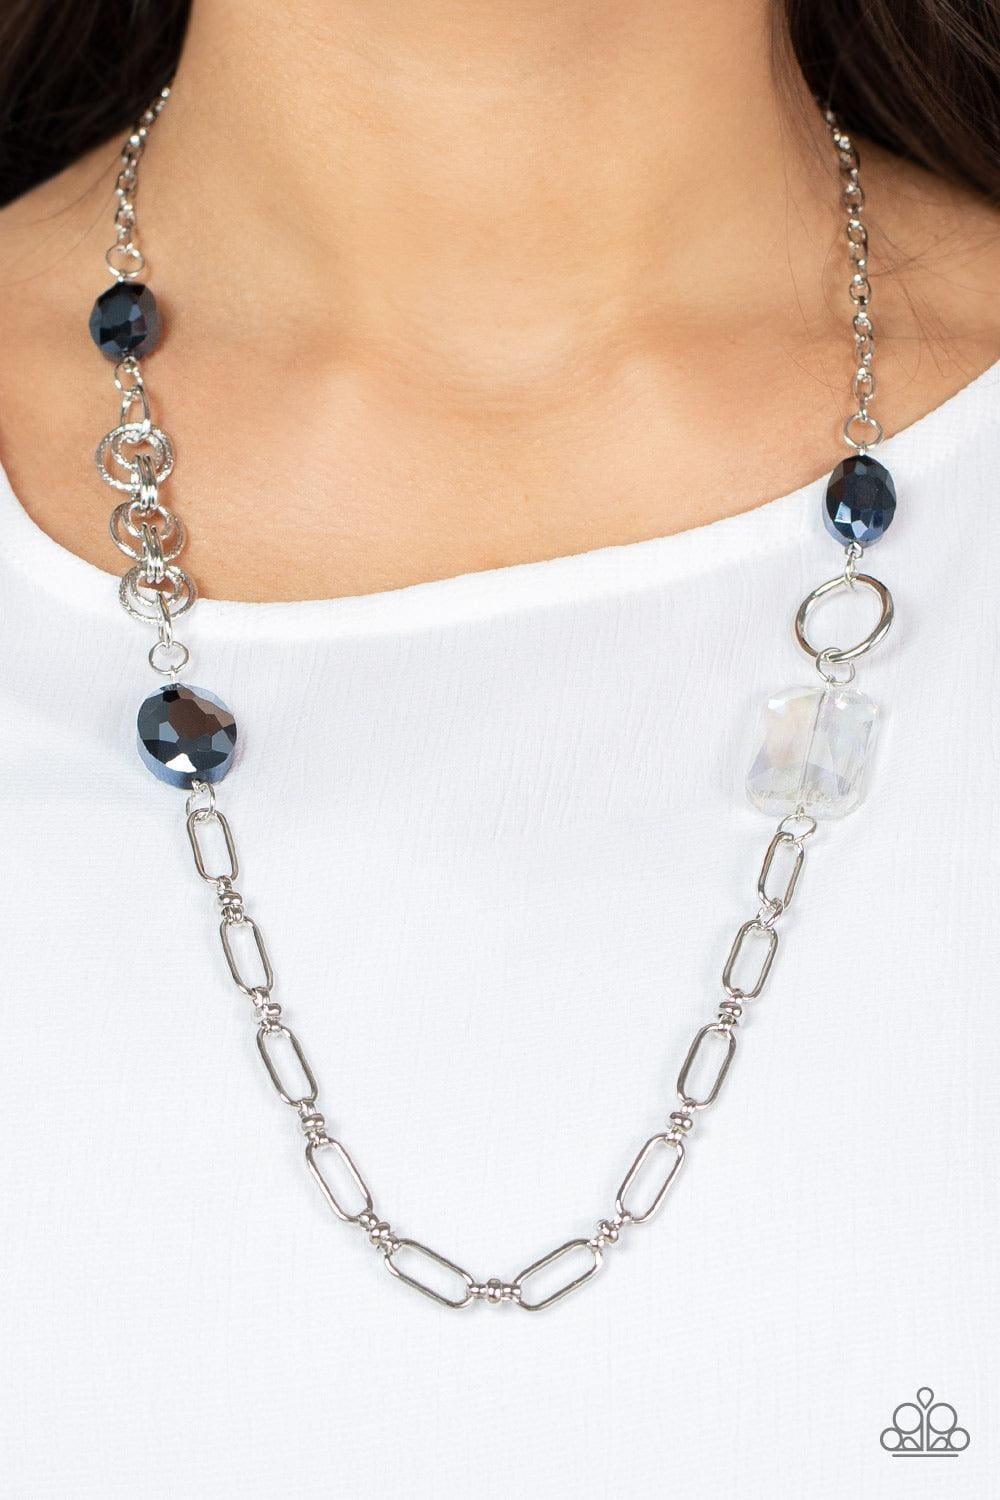 Take Note - blue - Paparazzi necklace – JewelryBlingThing